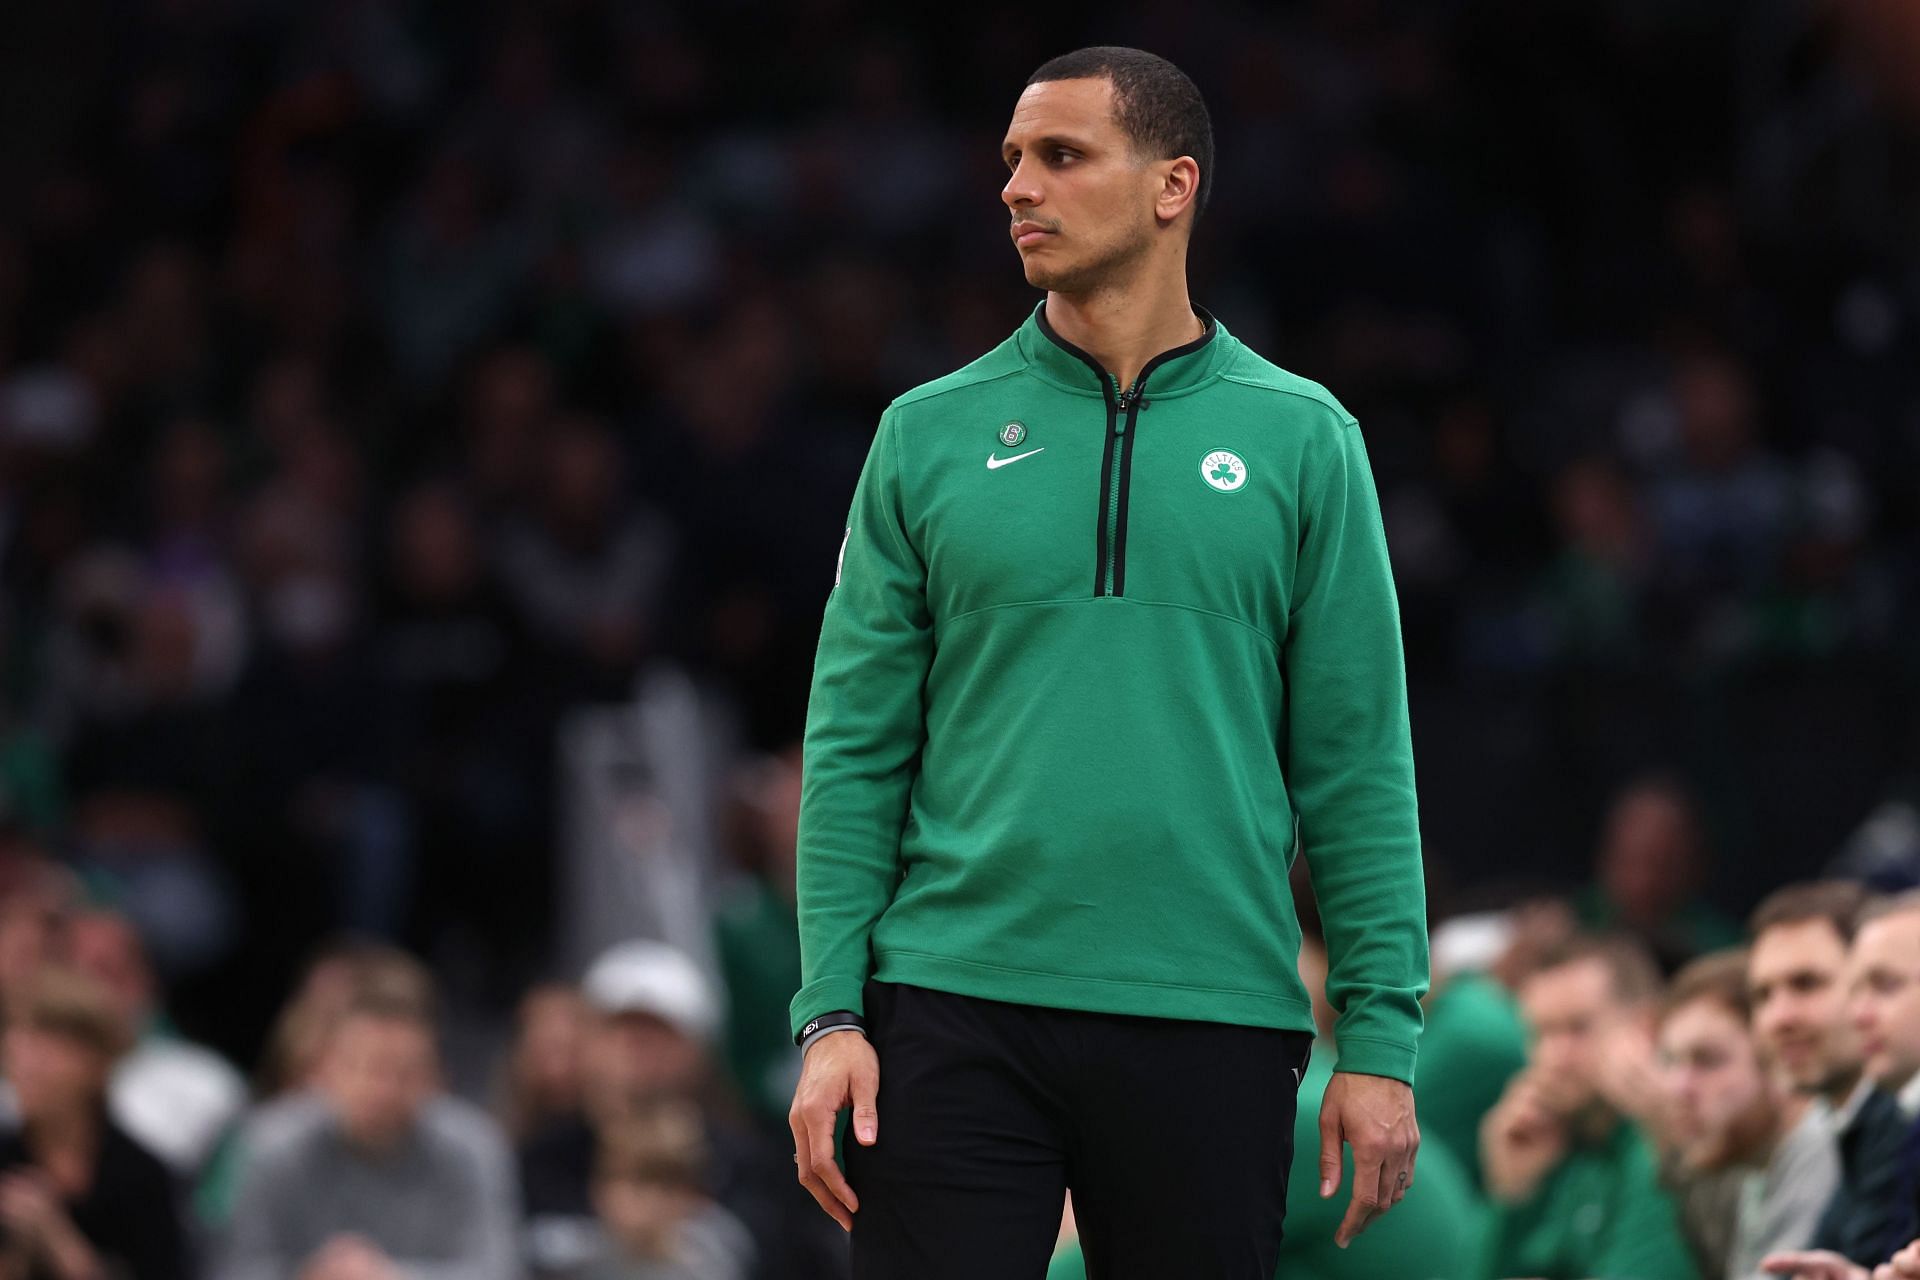 Mazzulla becomes 19th coach in Celtics history